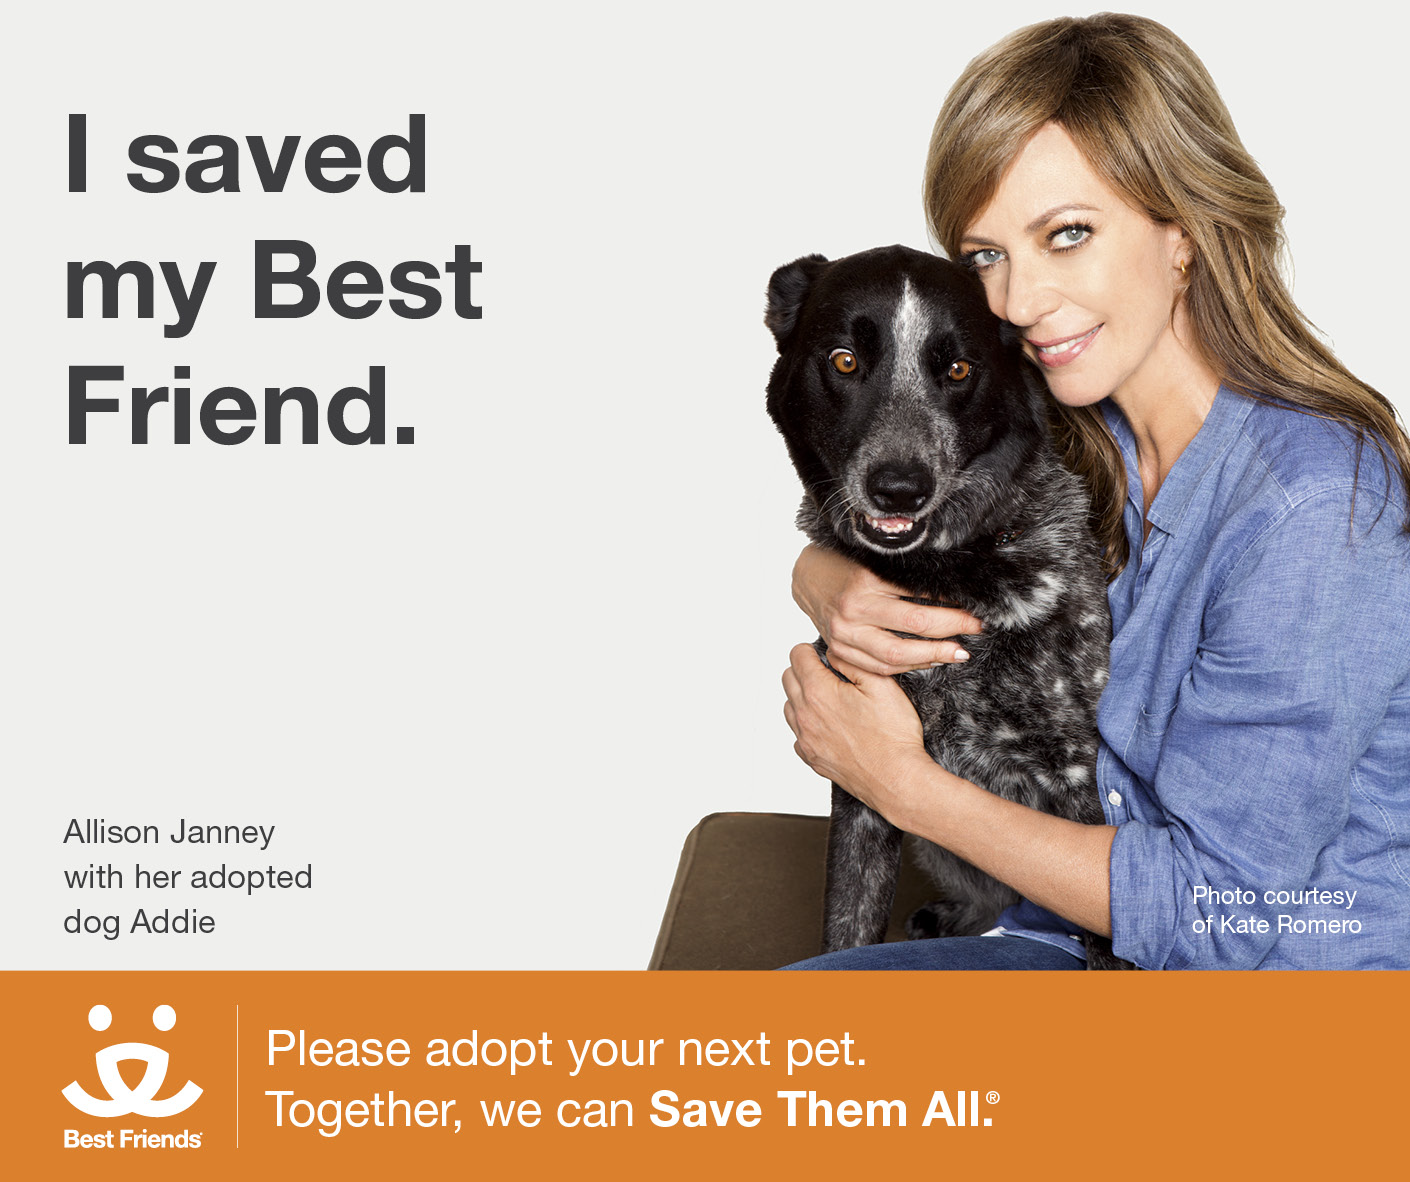 Allison Janney Joins Best Friends Animal Society's "I Saved My Best Friend" Campaign